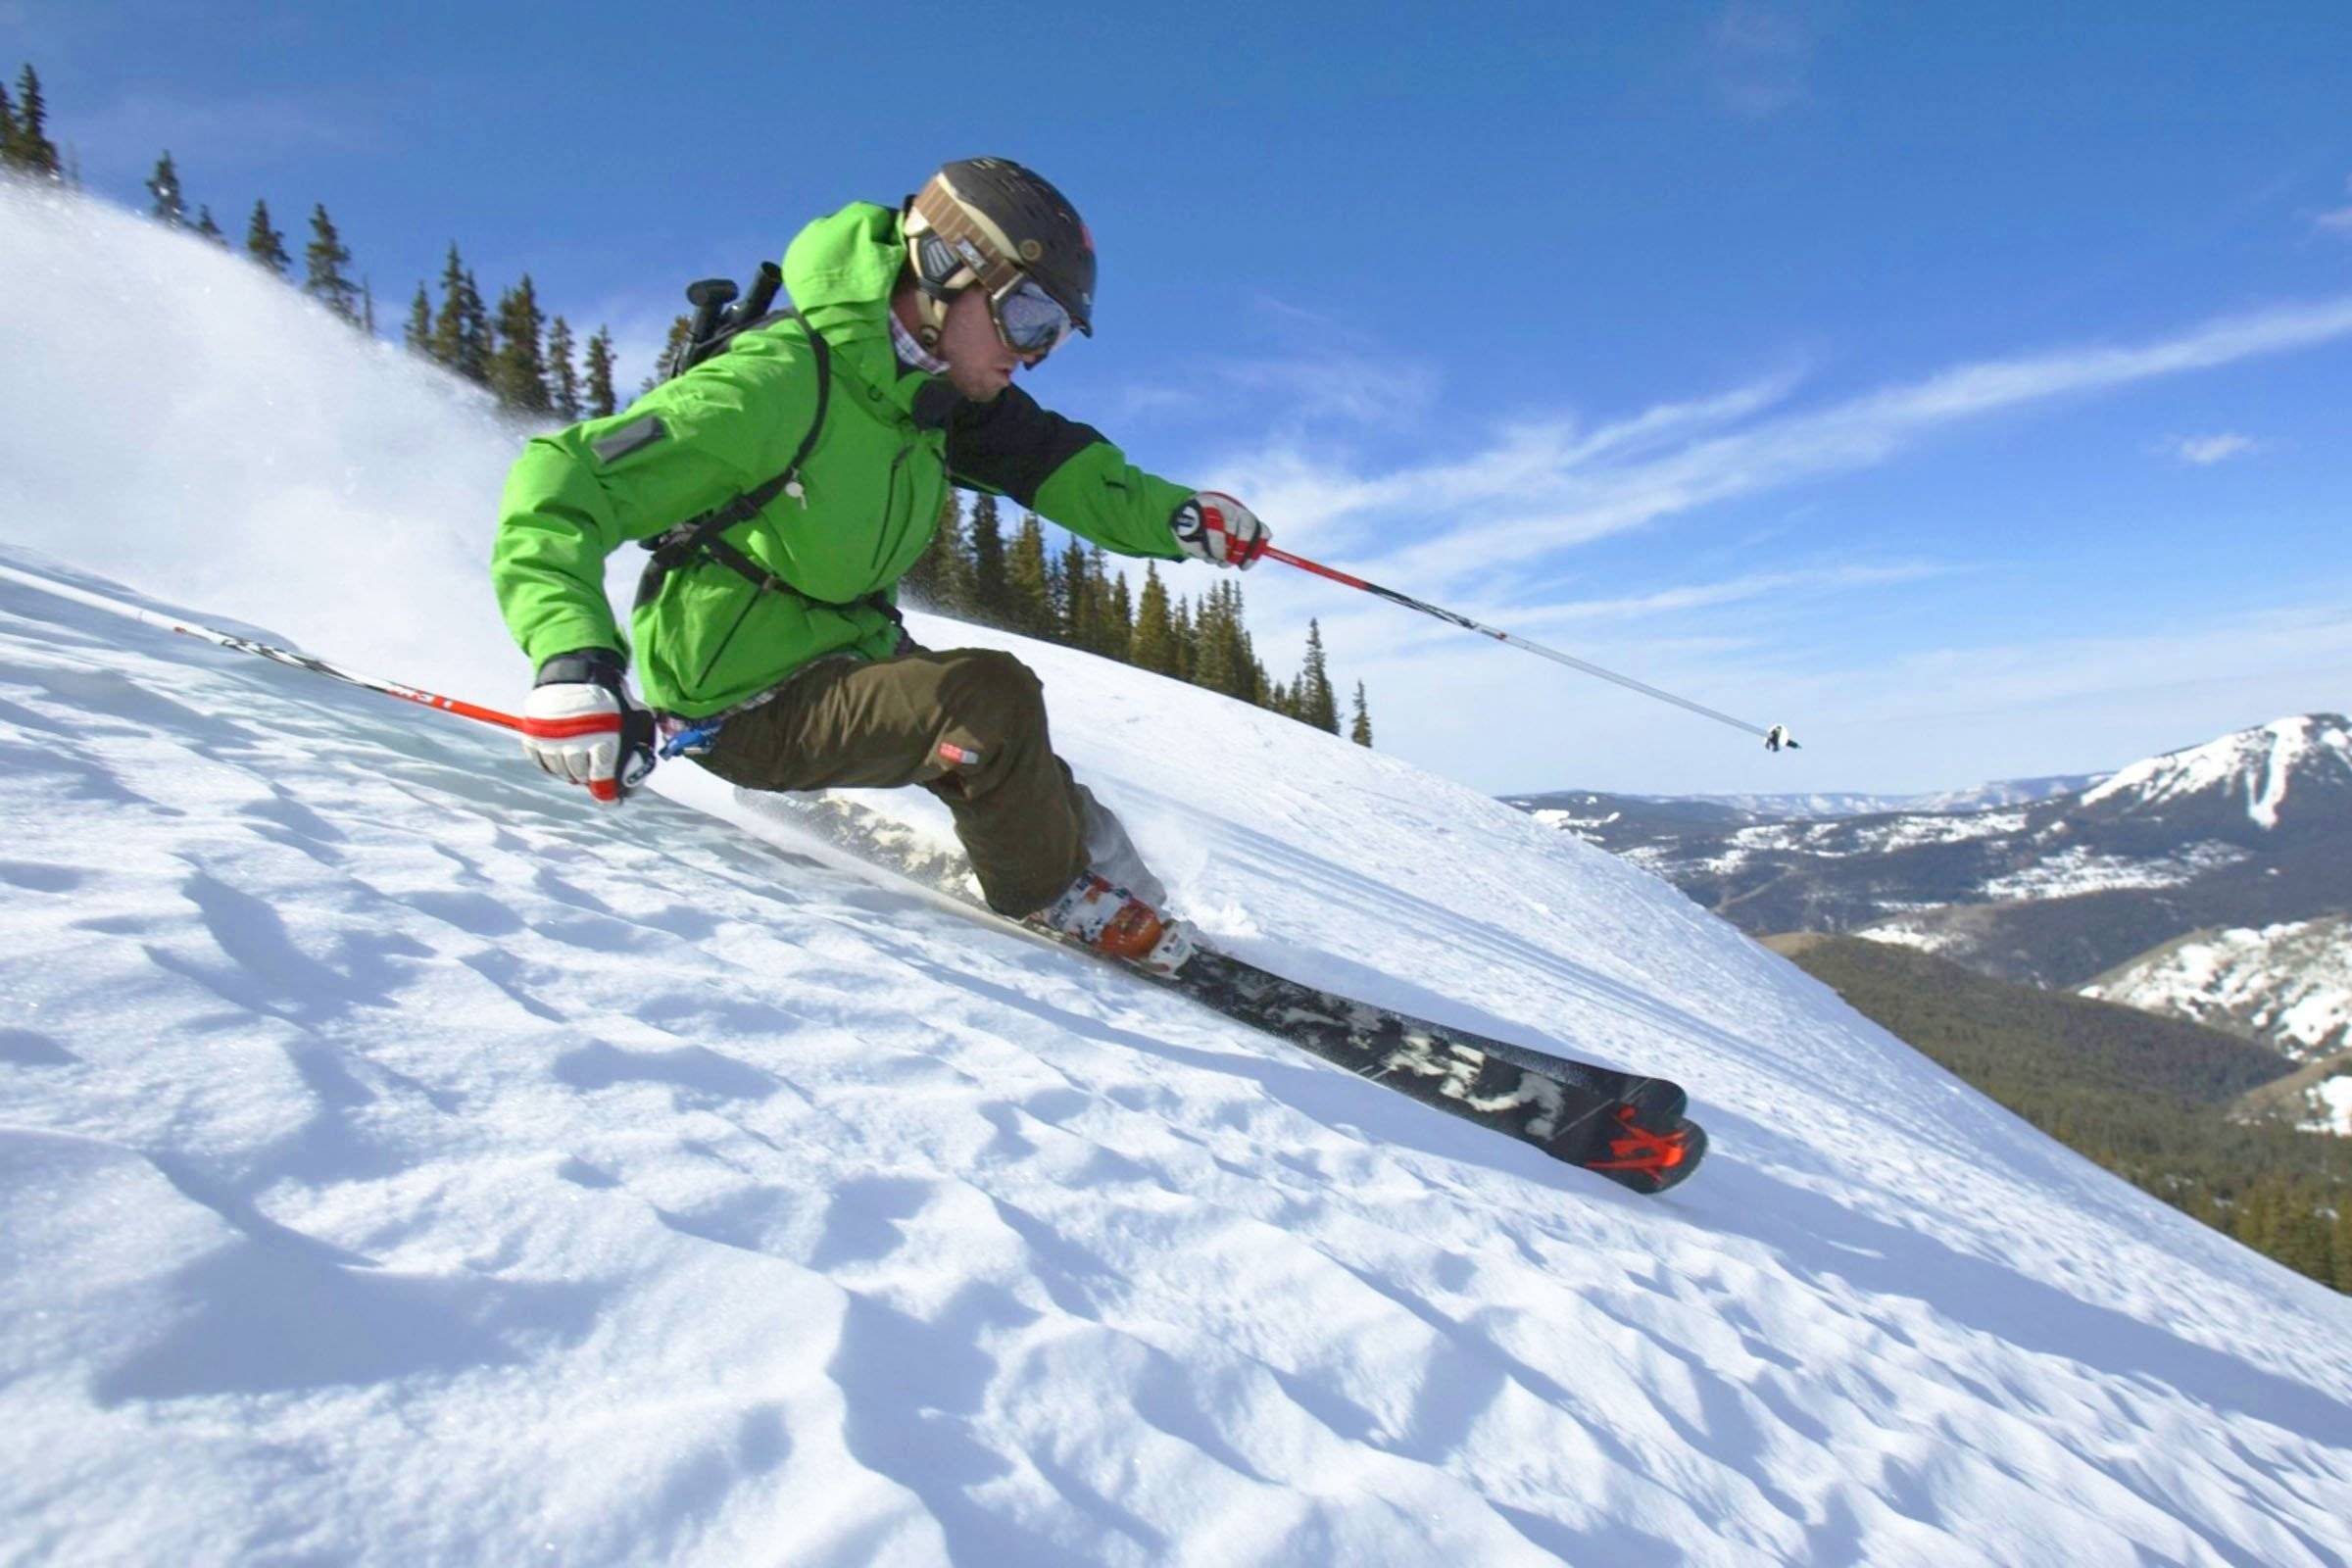 Фрирайд сноуборд: особенности техники и обучение катанию, отличие от фристайла, подбор нужной доски